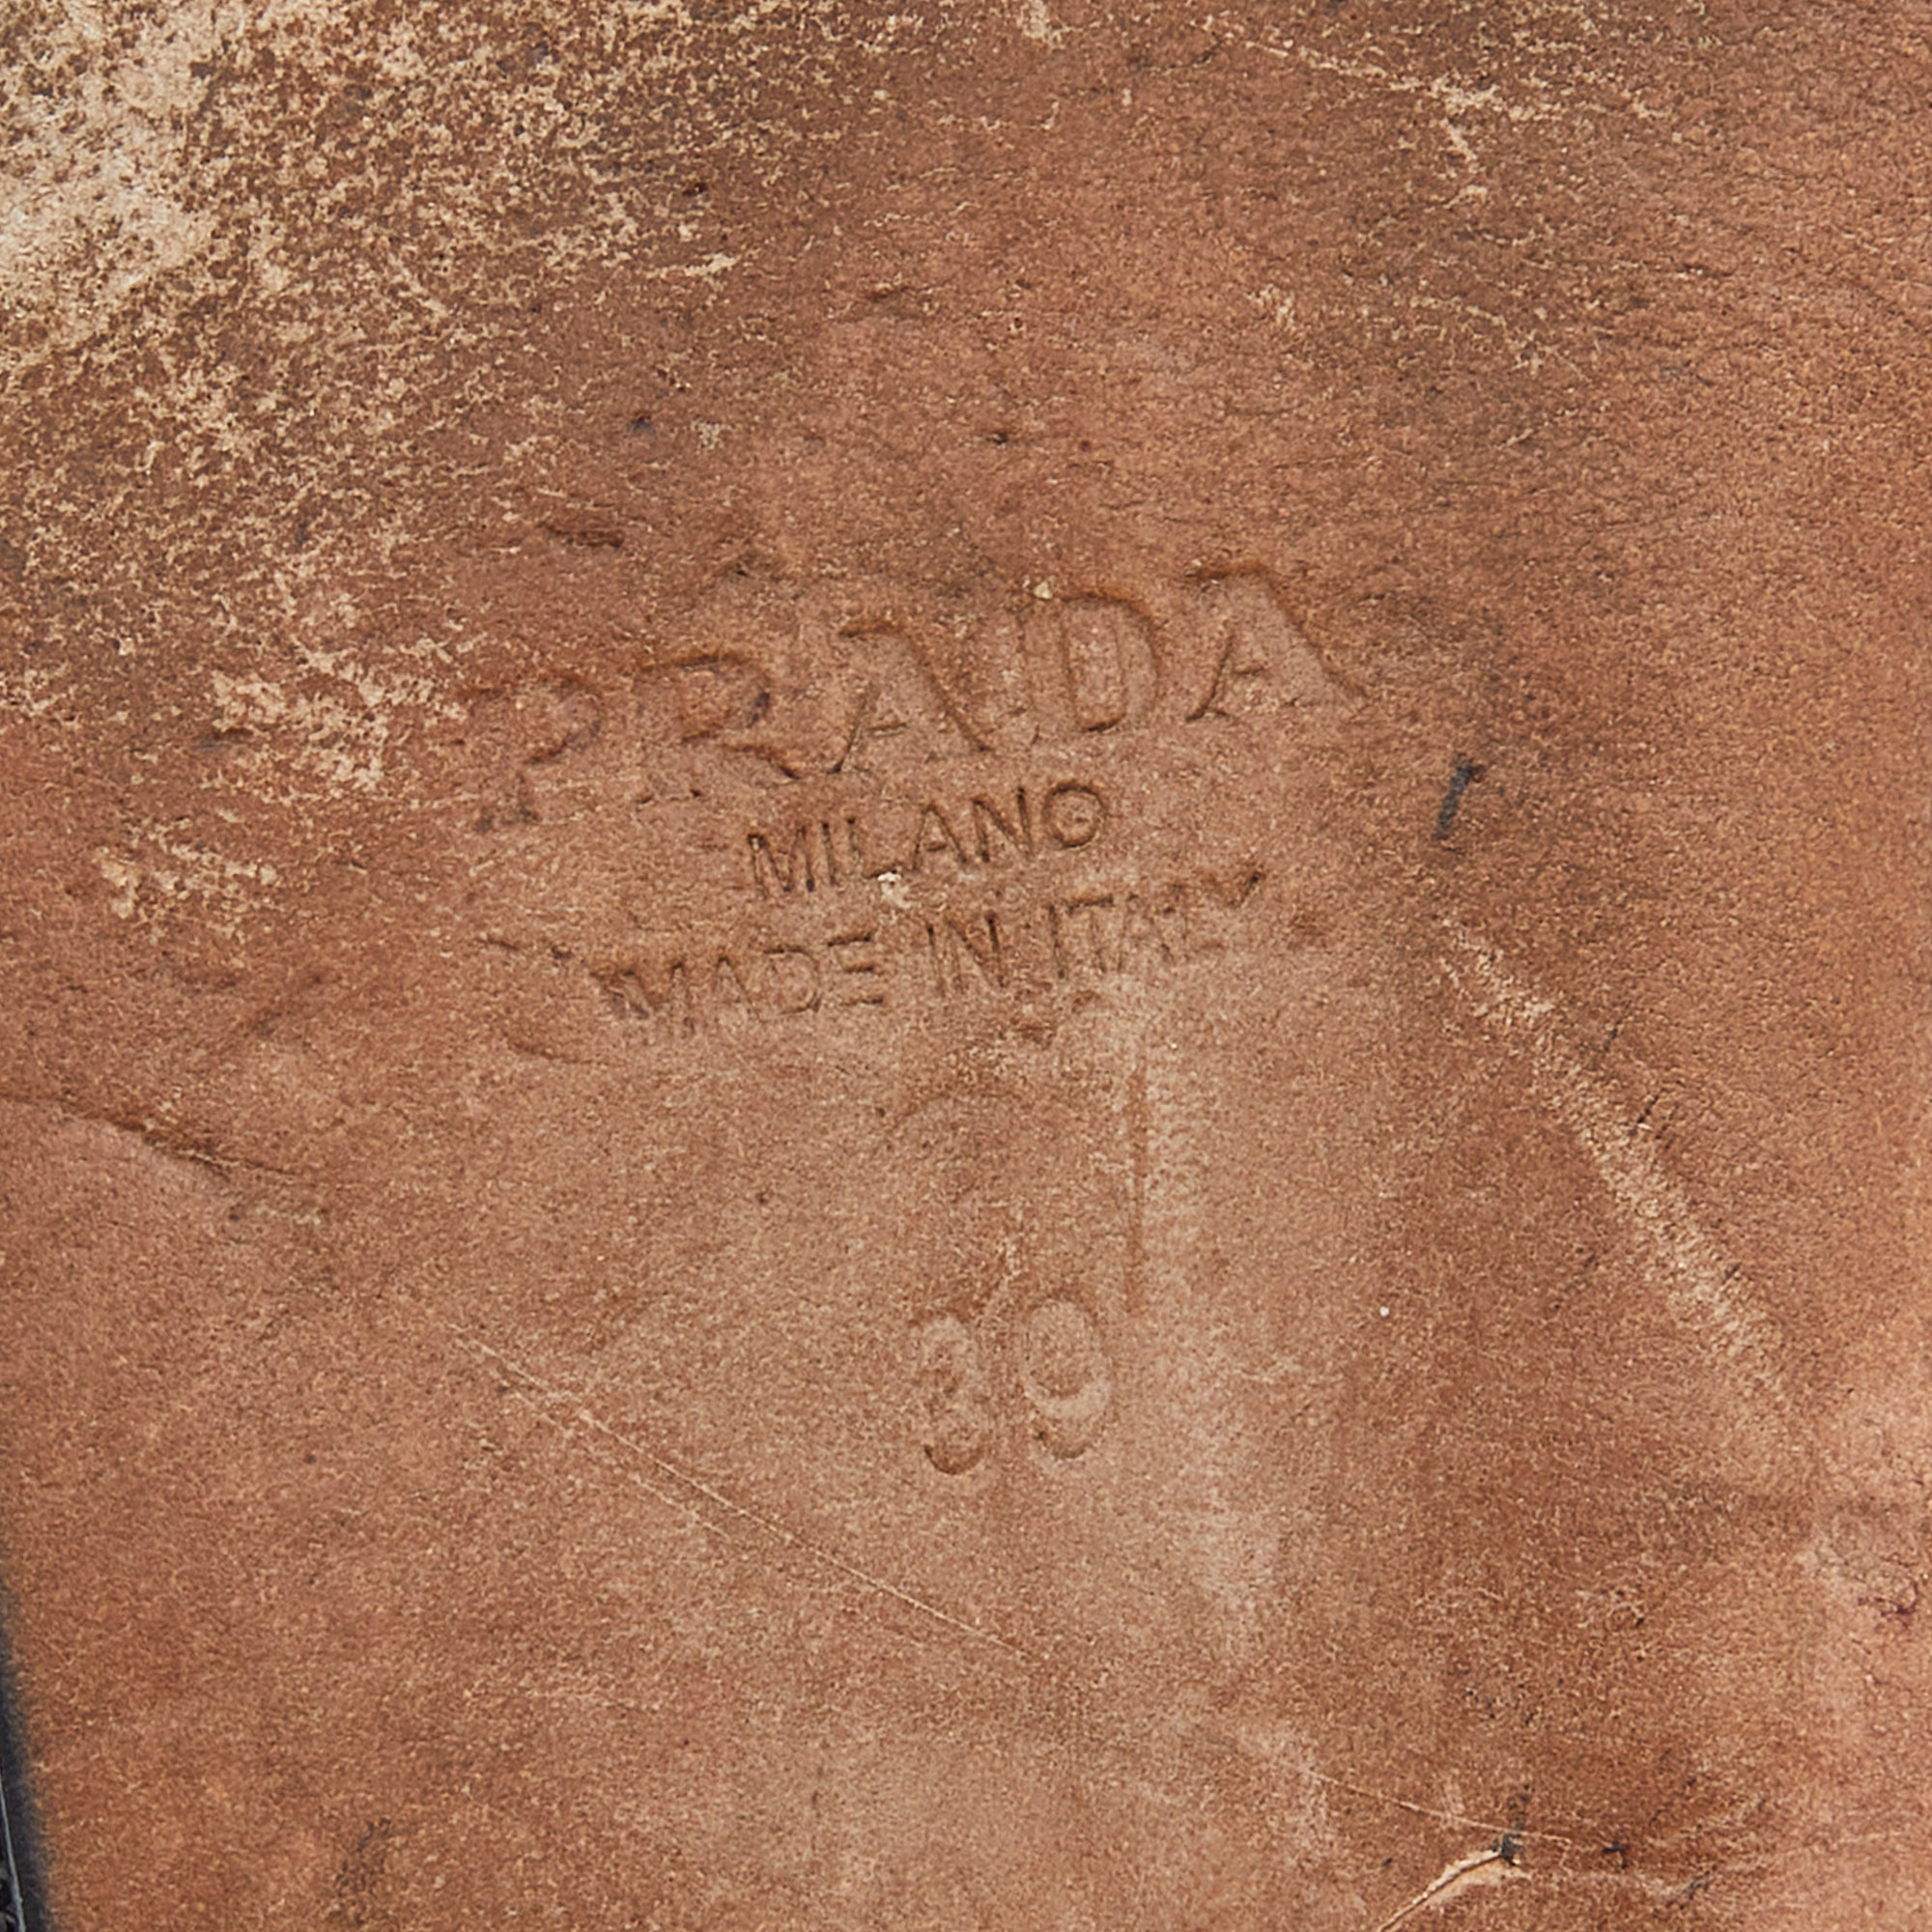 Prada Black Patent Leather Flat Mules Size 39